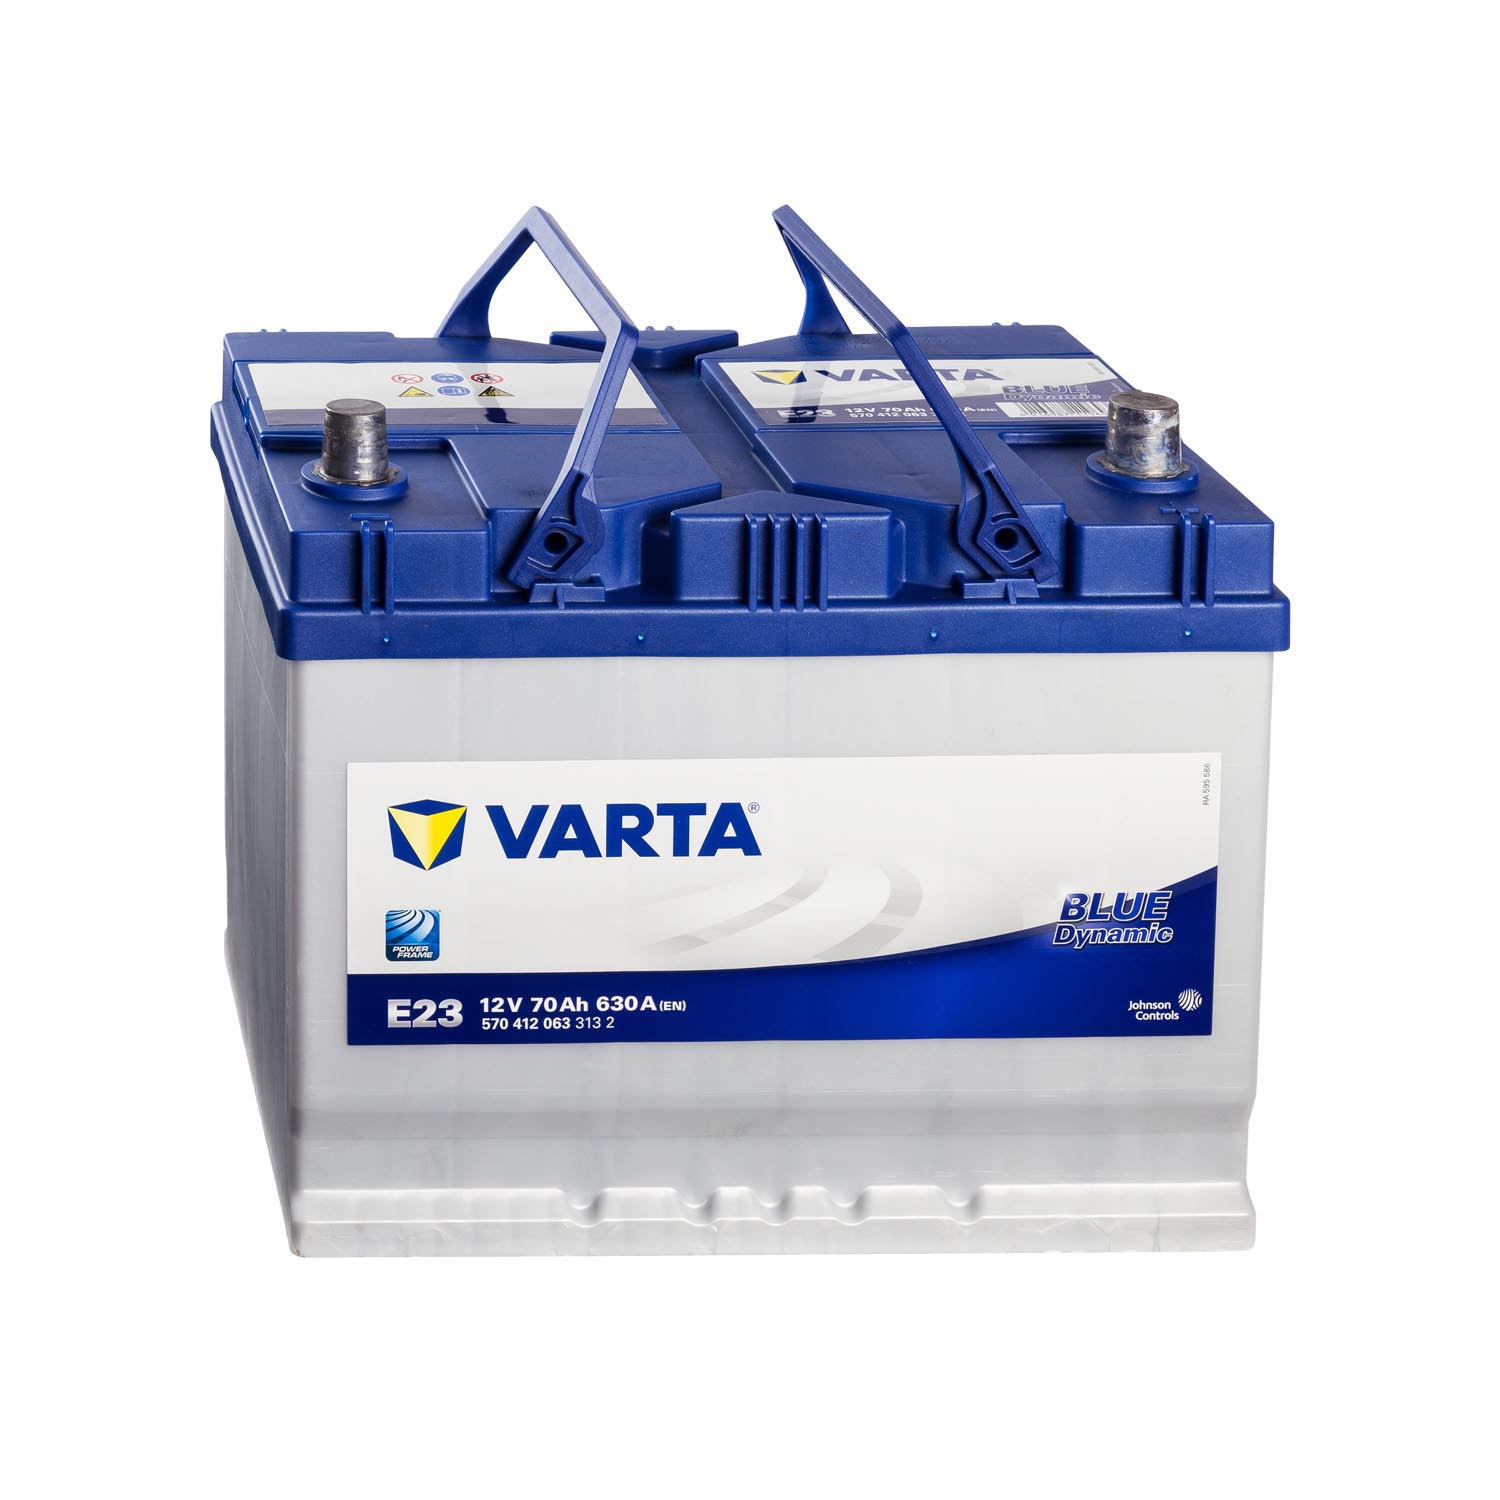  Varta Blue Dynamic E23 12V 70Ah 630A